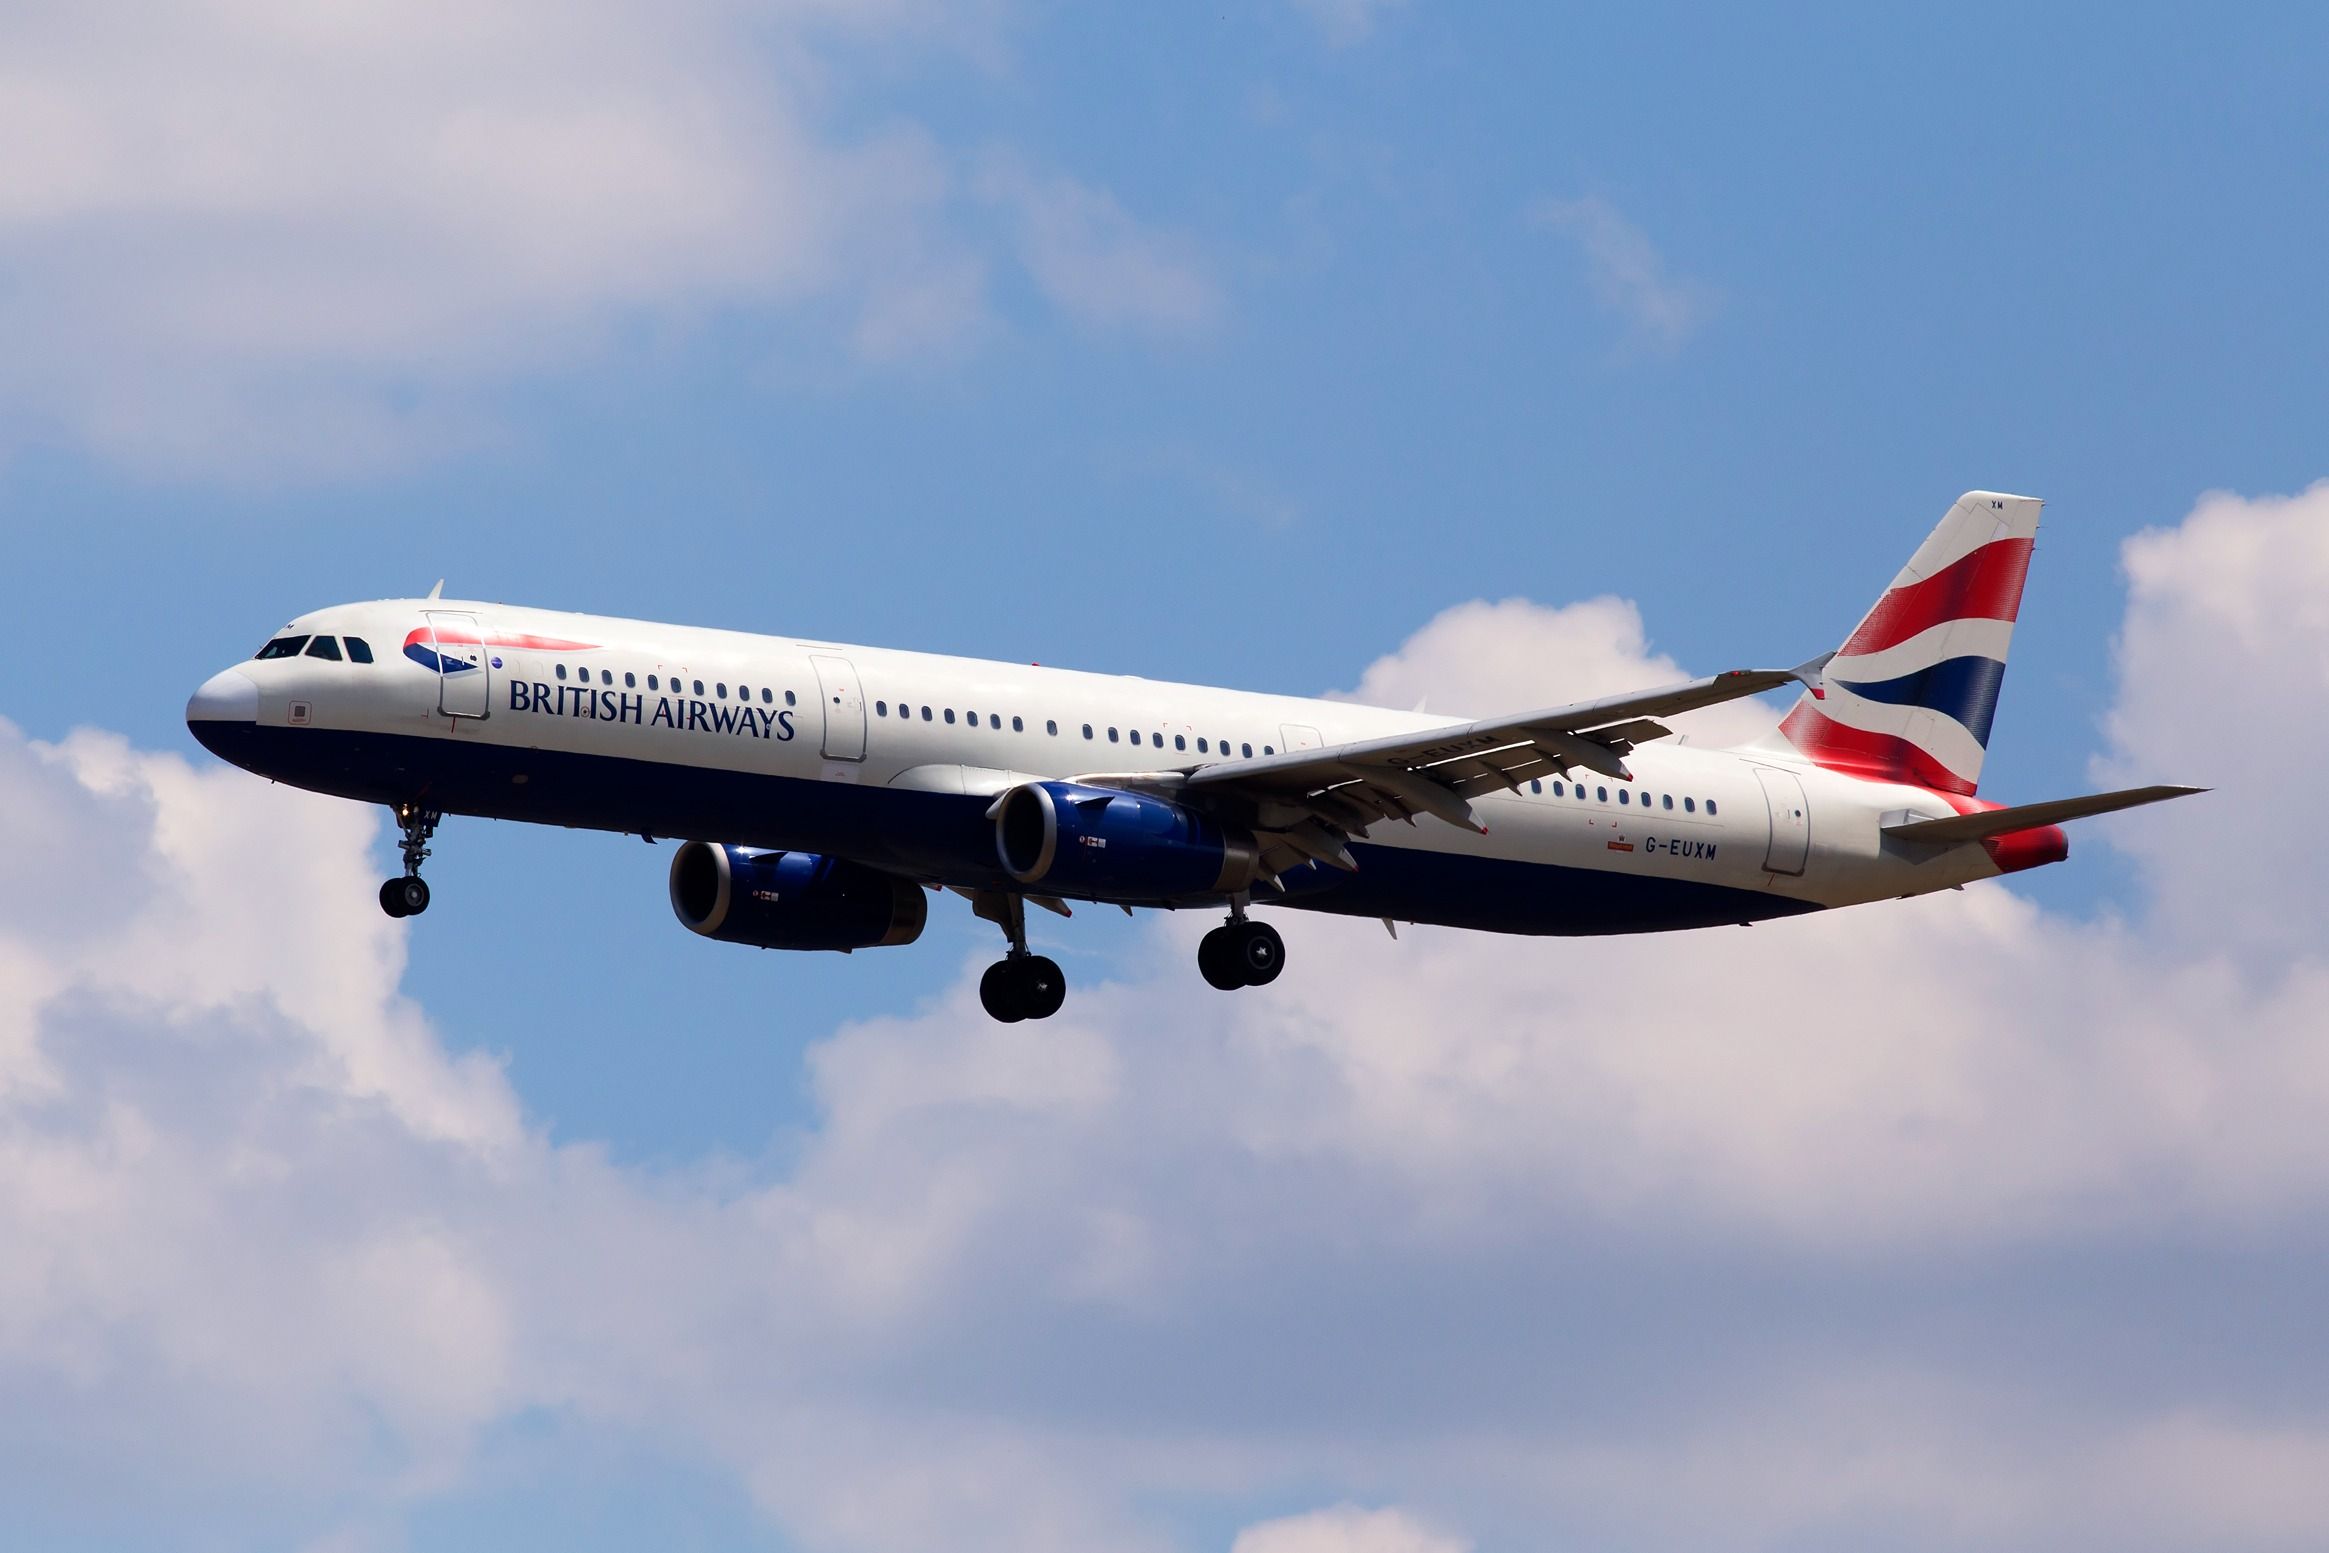 British Airways Airbus A321 on approach